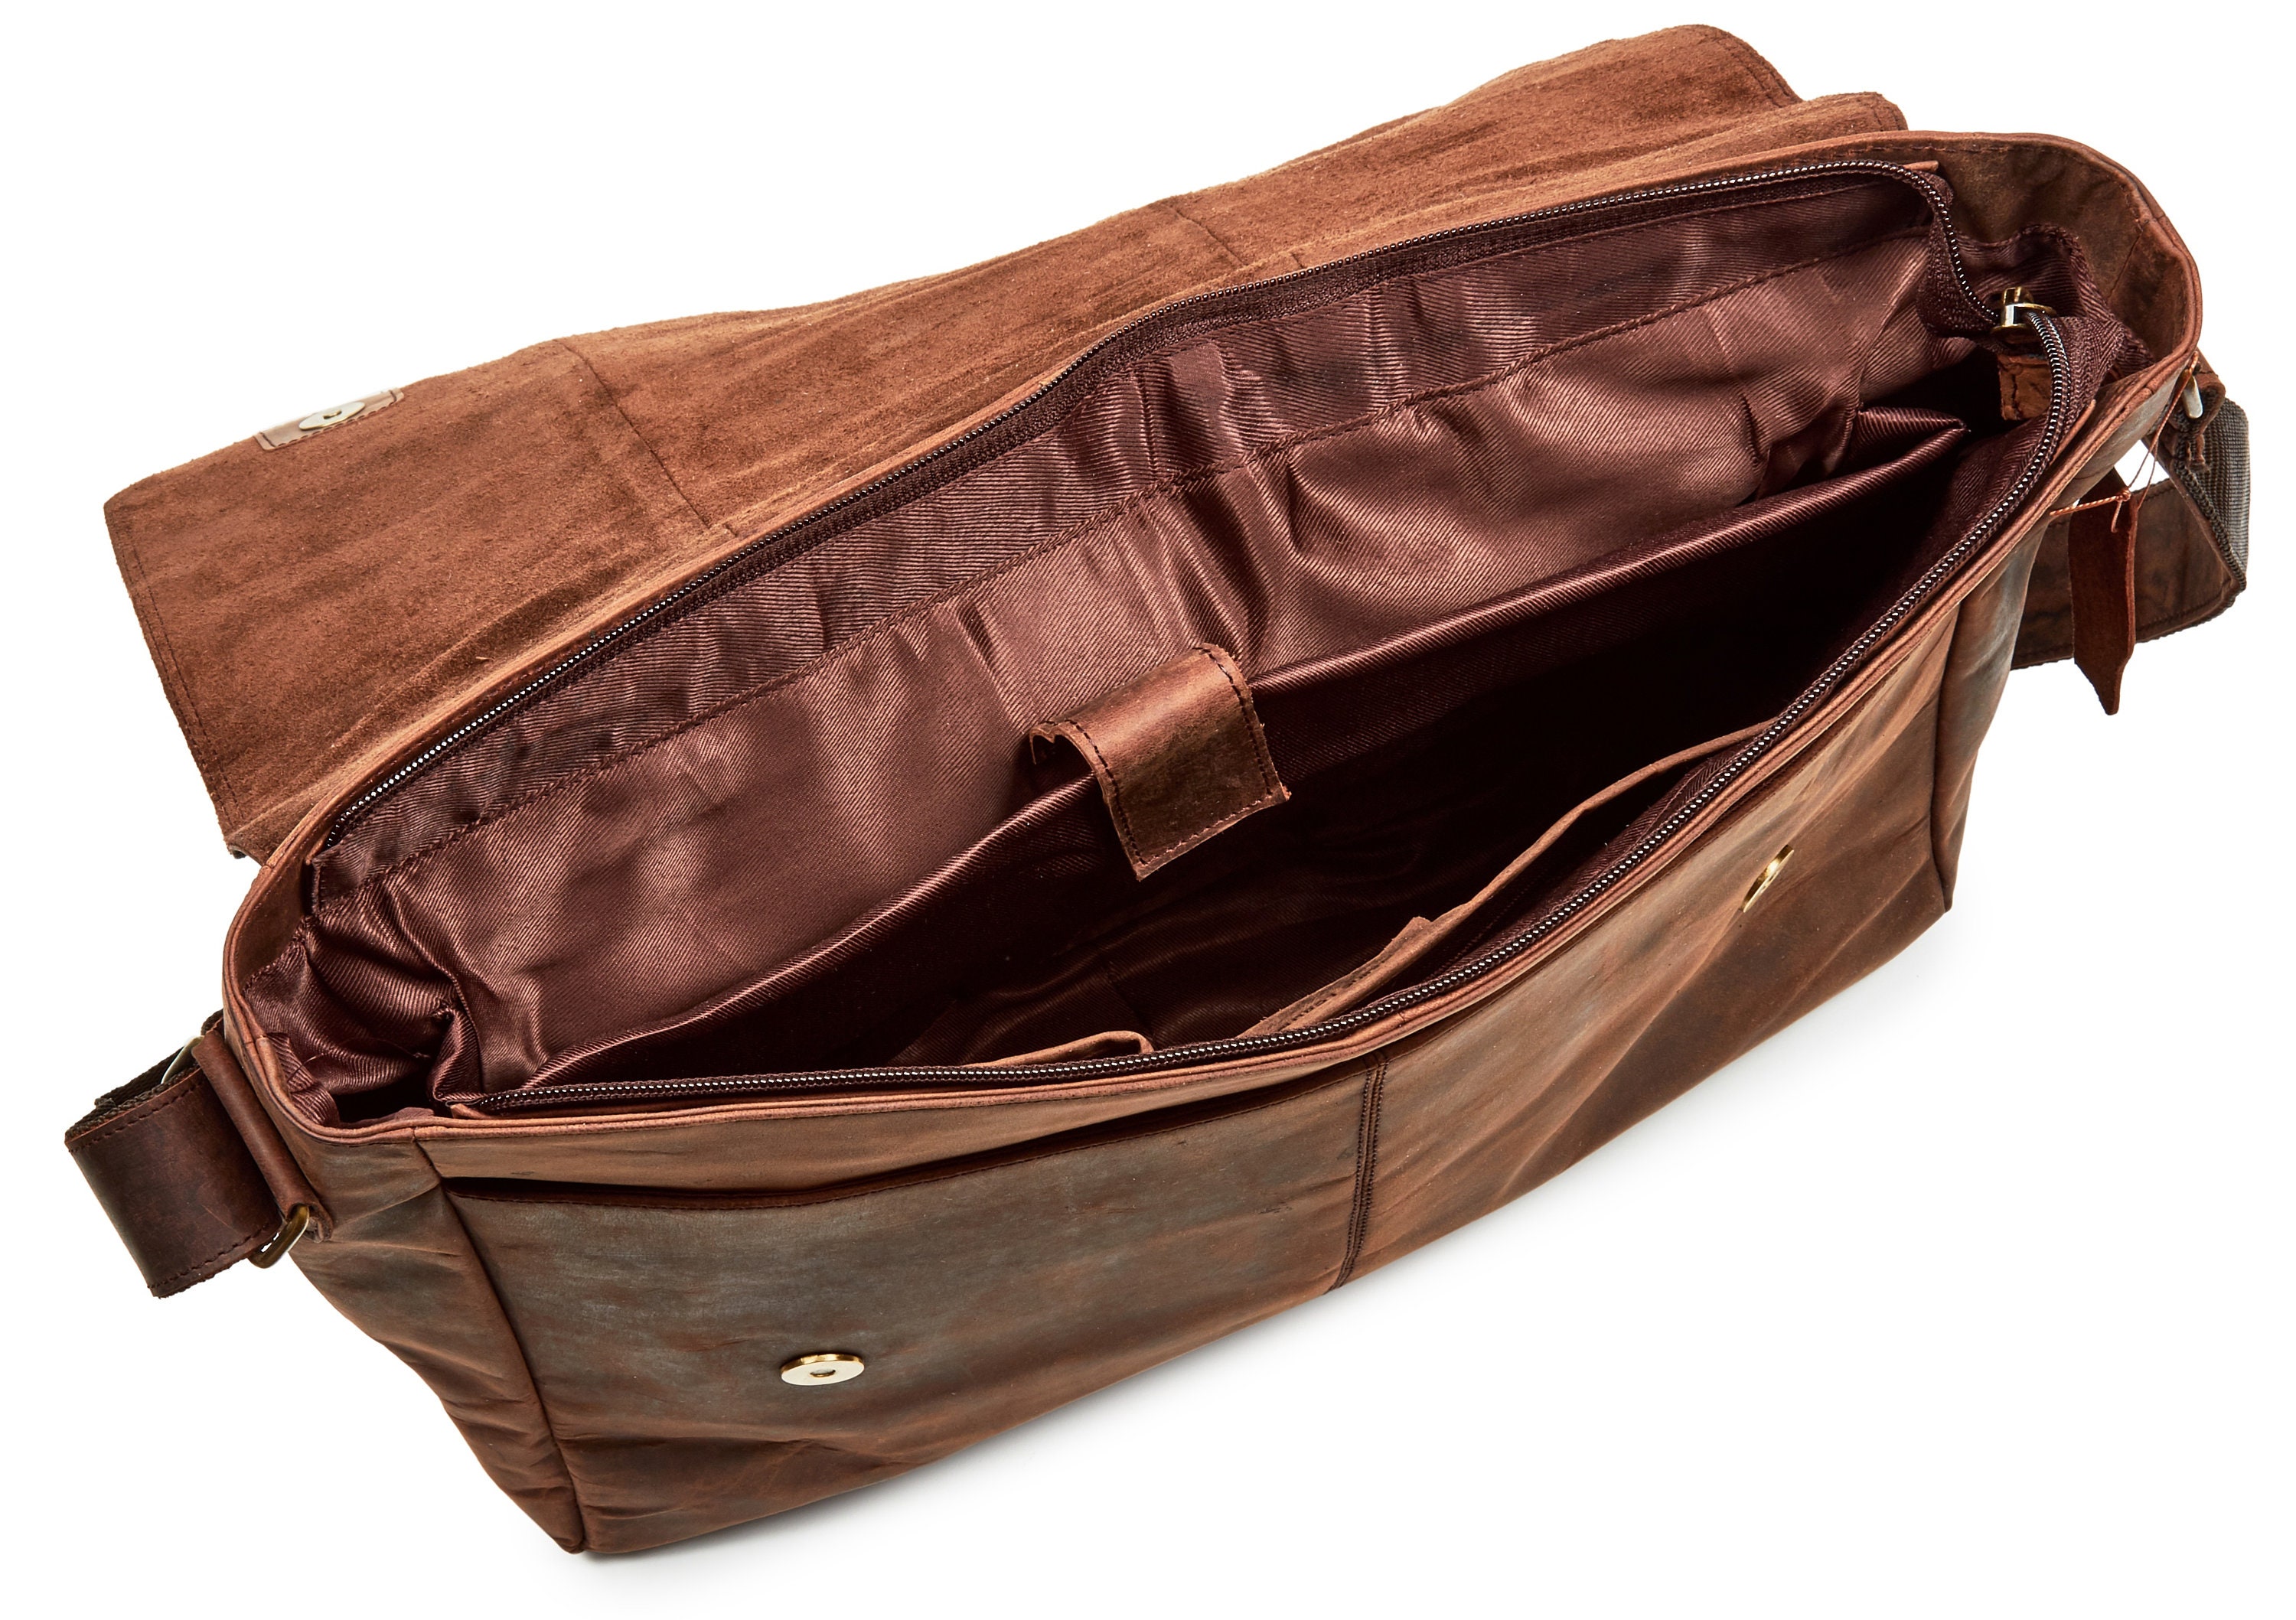 Leather Messenger Bag for Men & Women 14inch laptop Bag for Travel College Work Handmade by LEVOGUE Brown Oily Hunter 